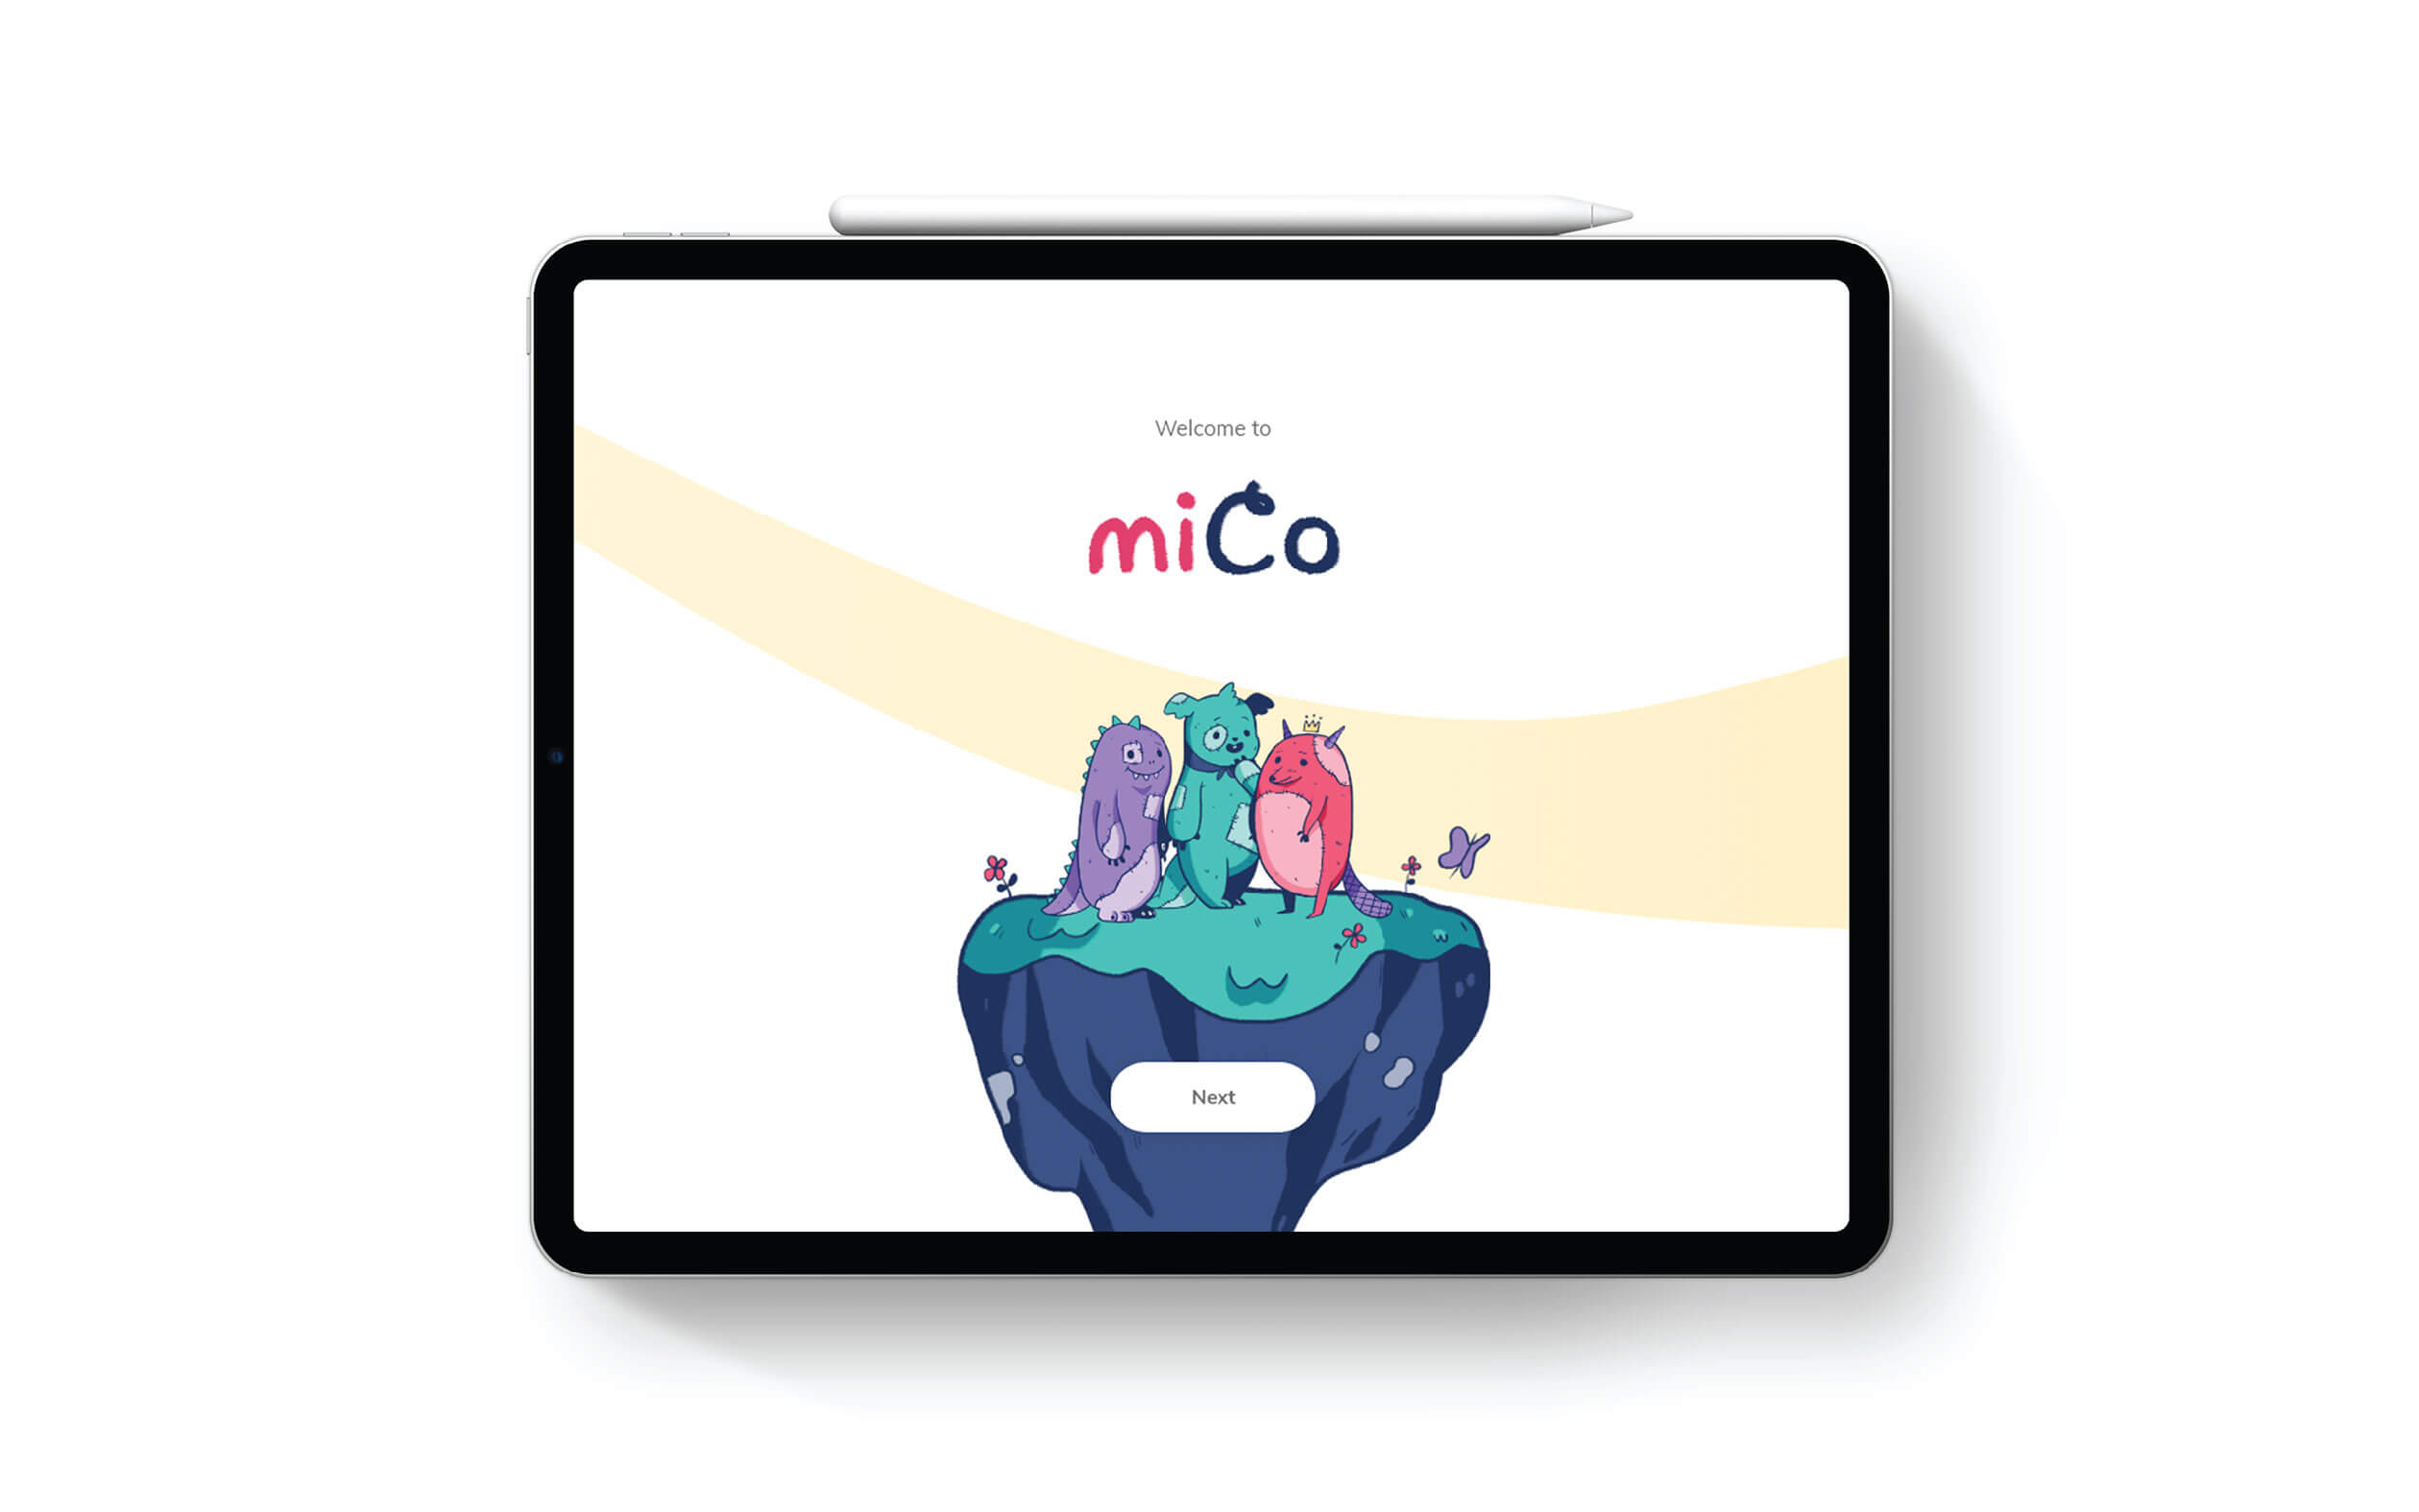 MiCo Mockup on an iPad Home Screen